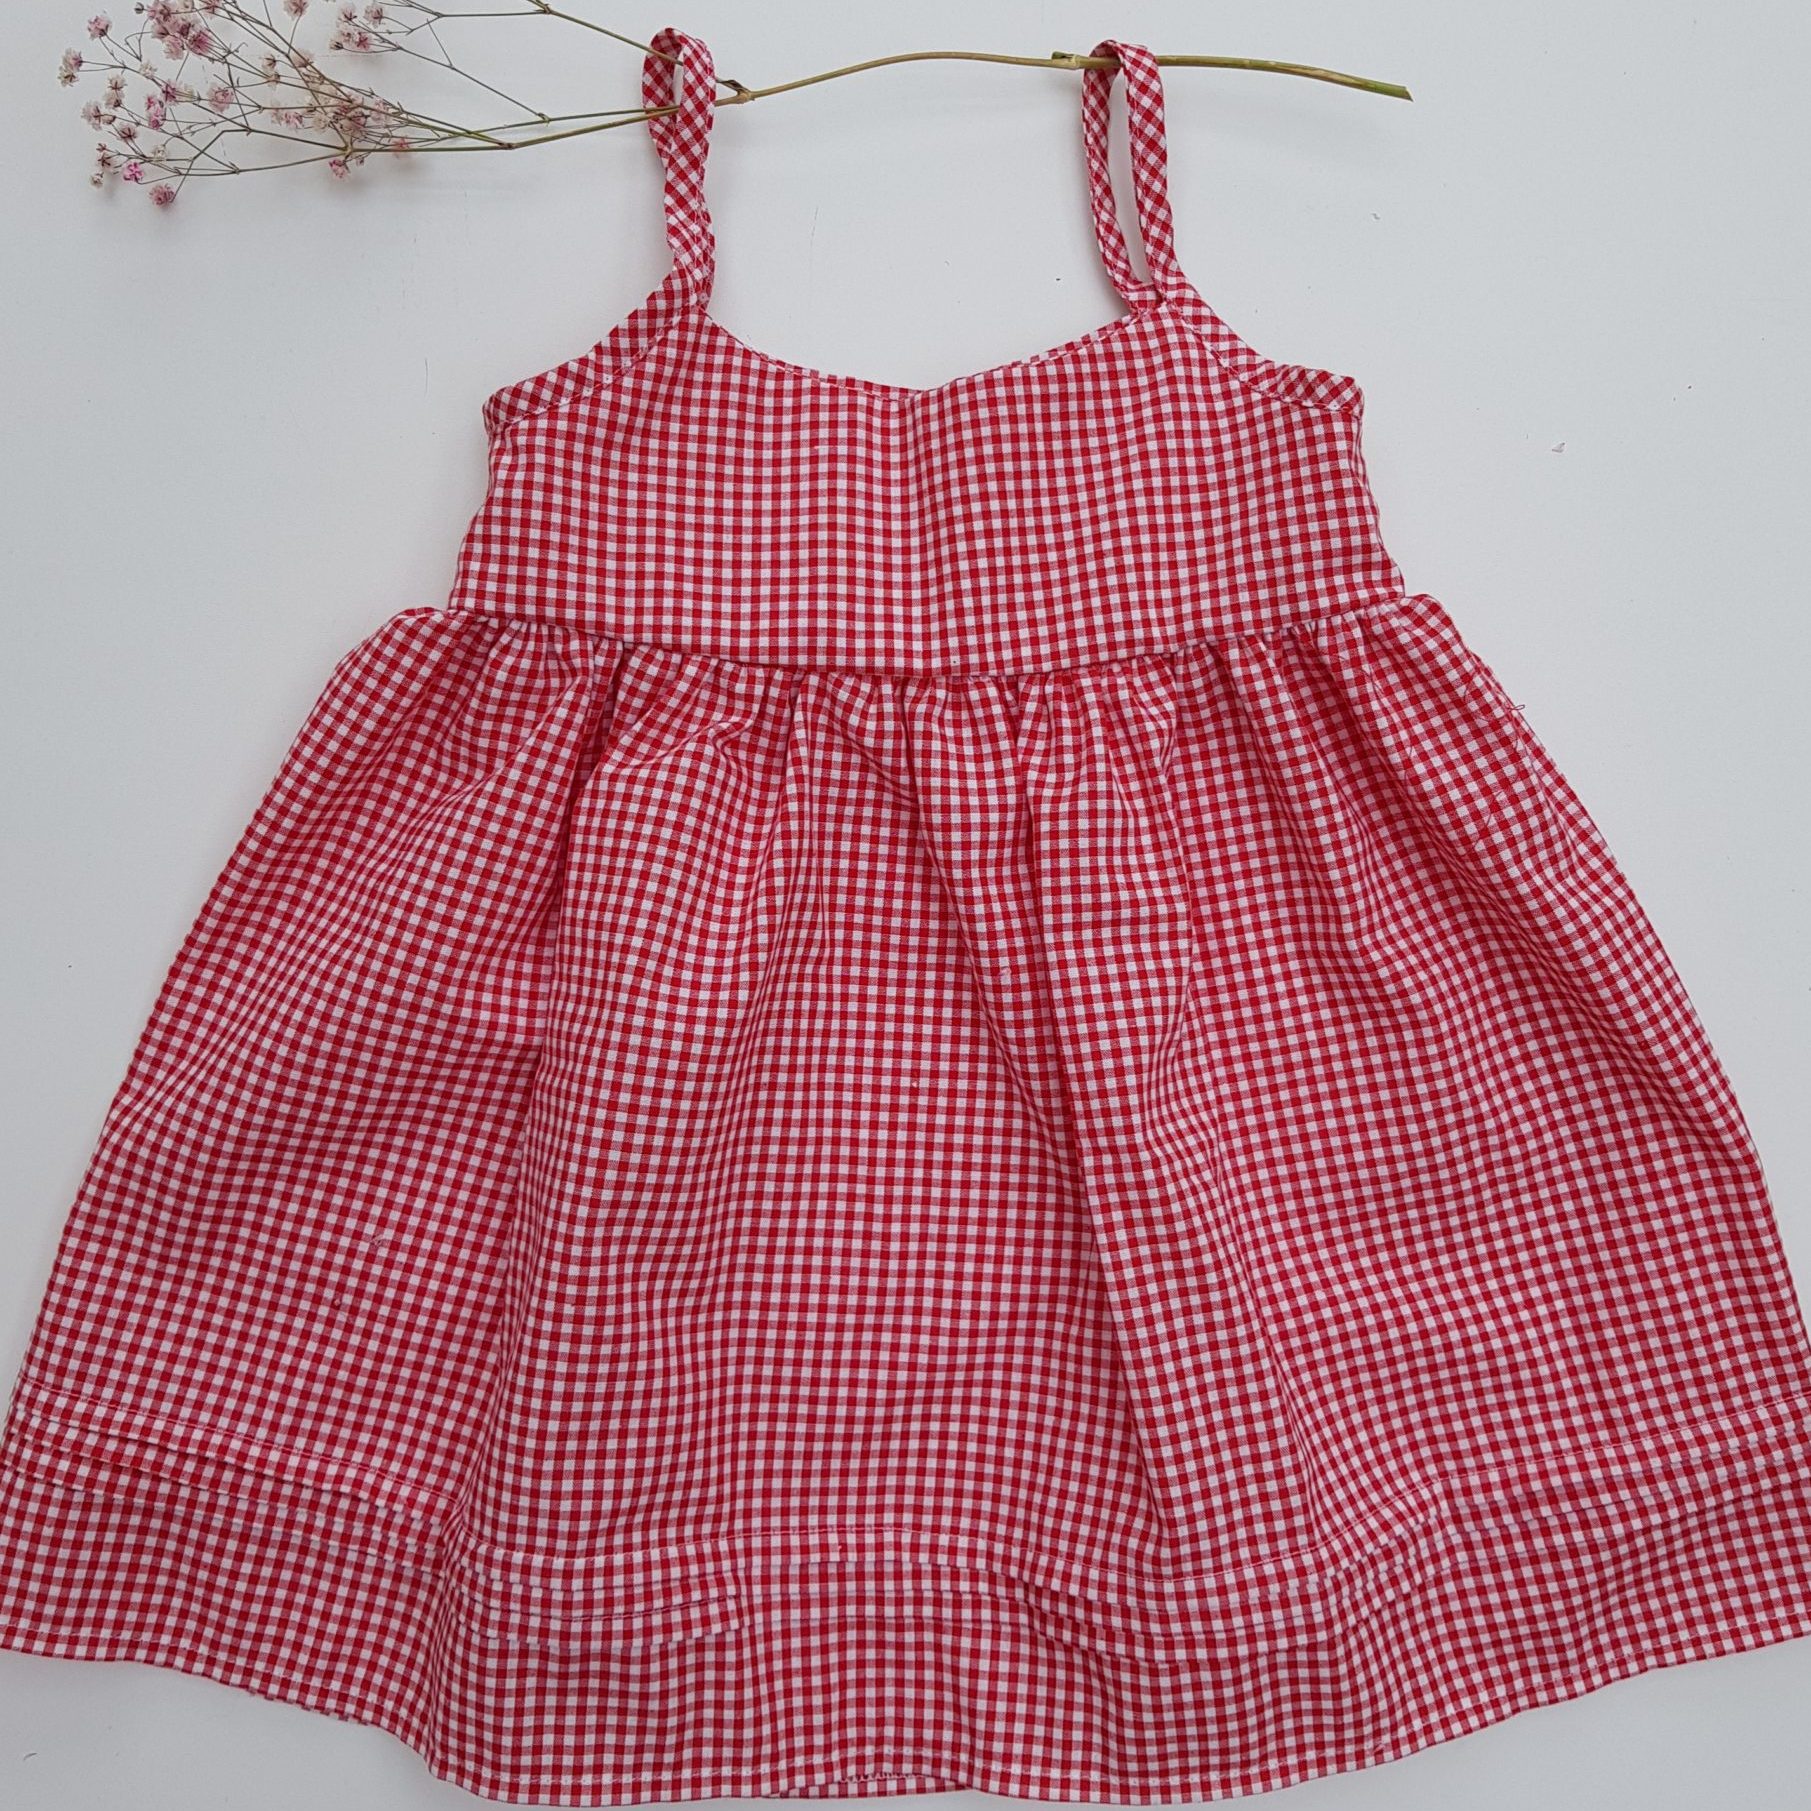 Cami Dress Sewing Pattern